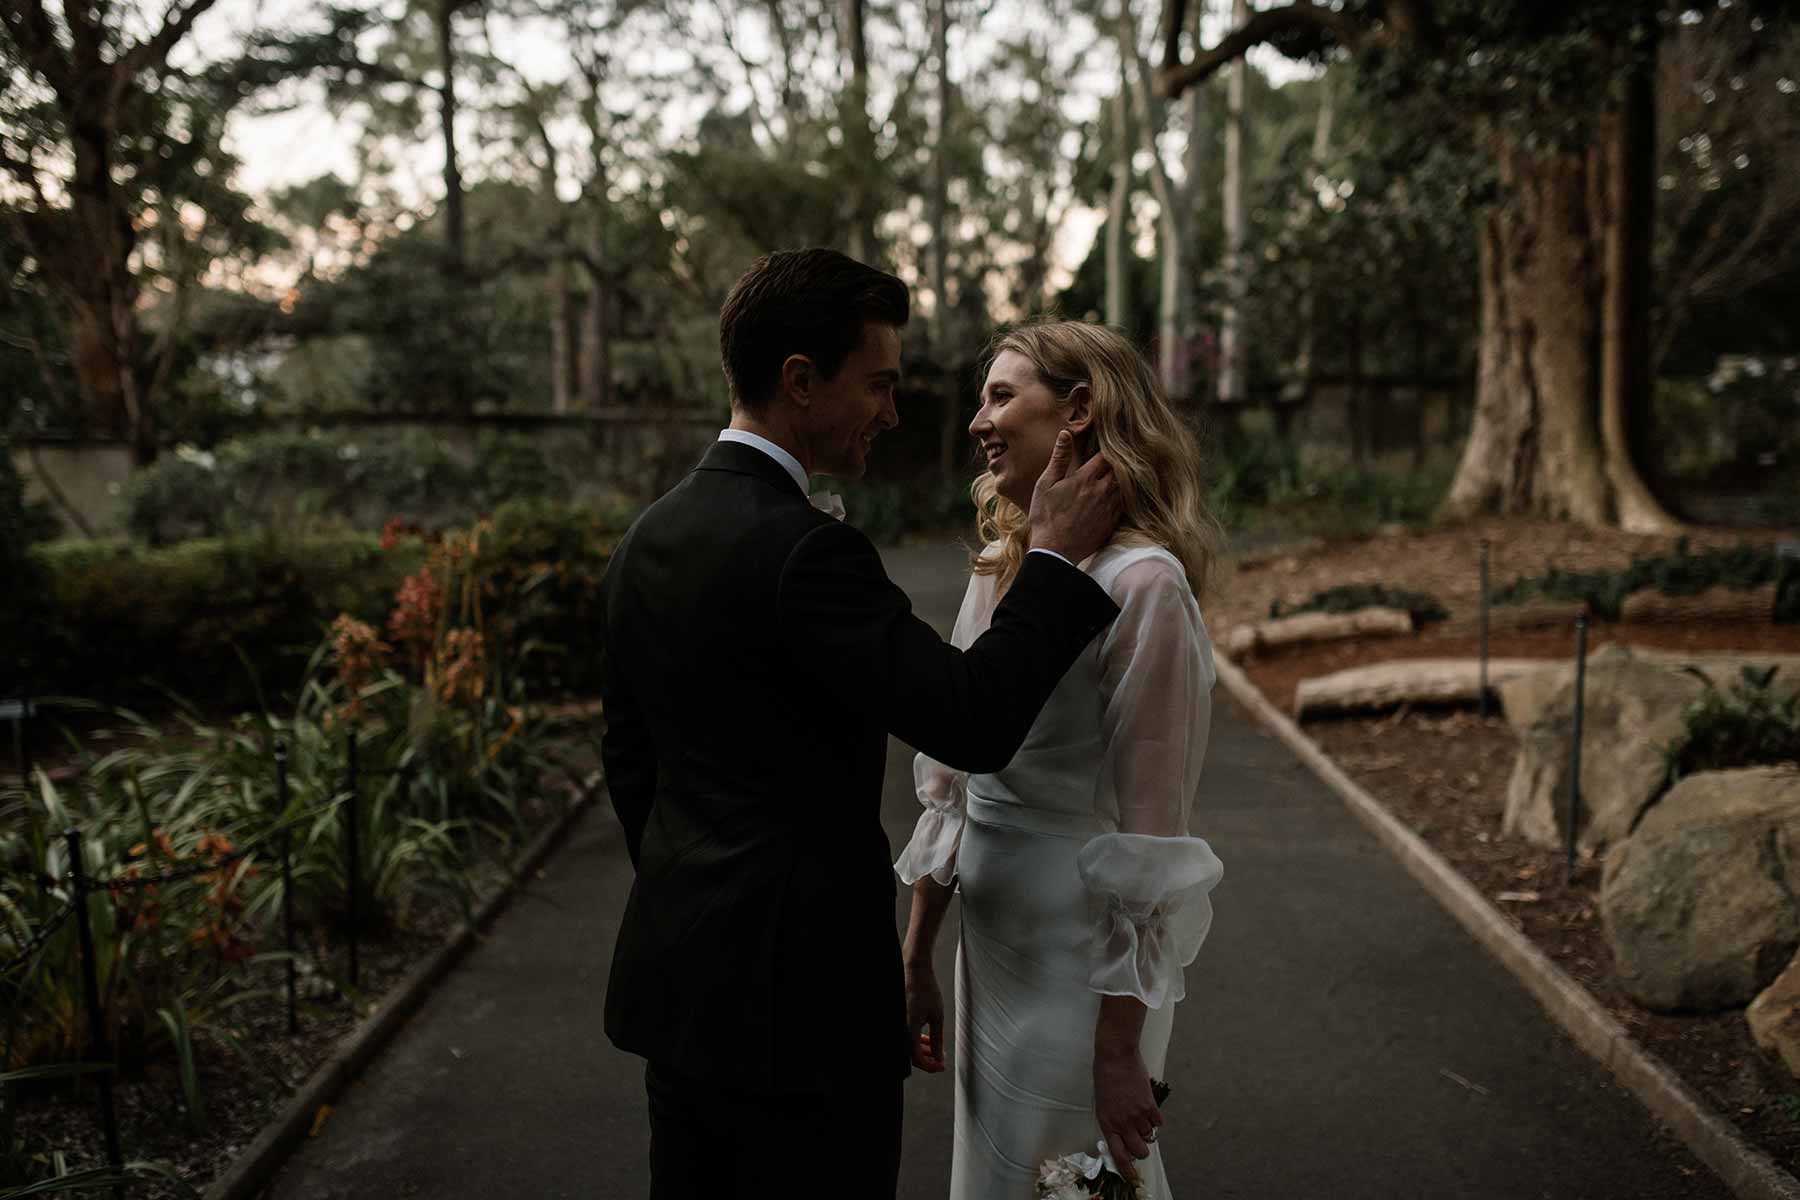 modern Sydney wedding photographer Damien Milan